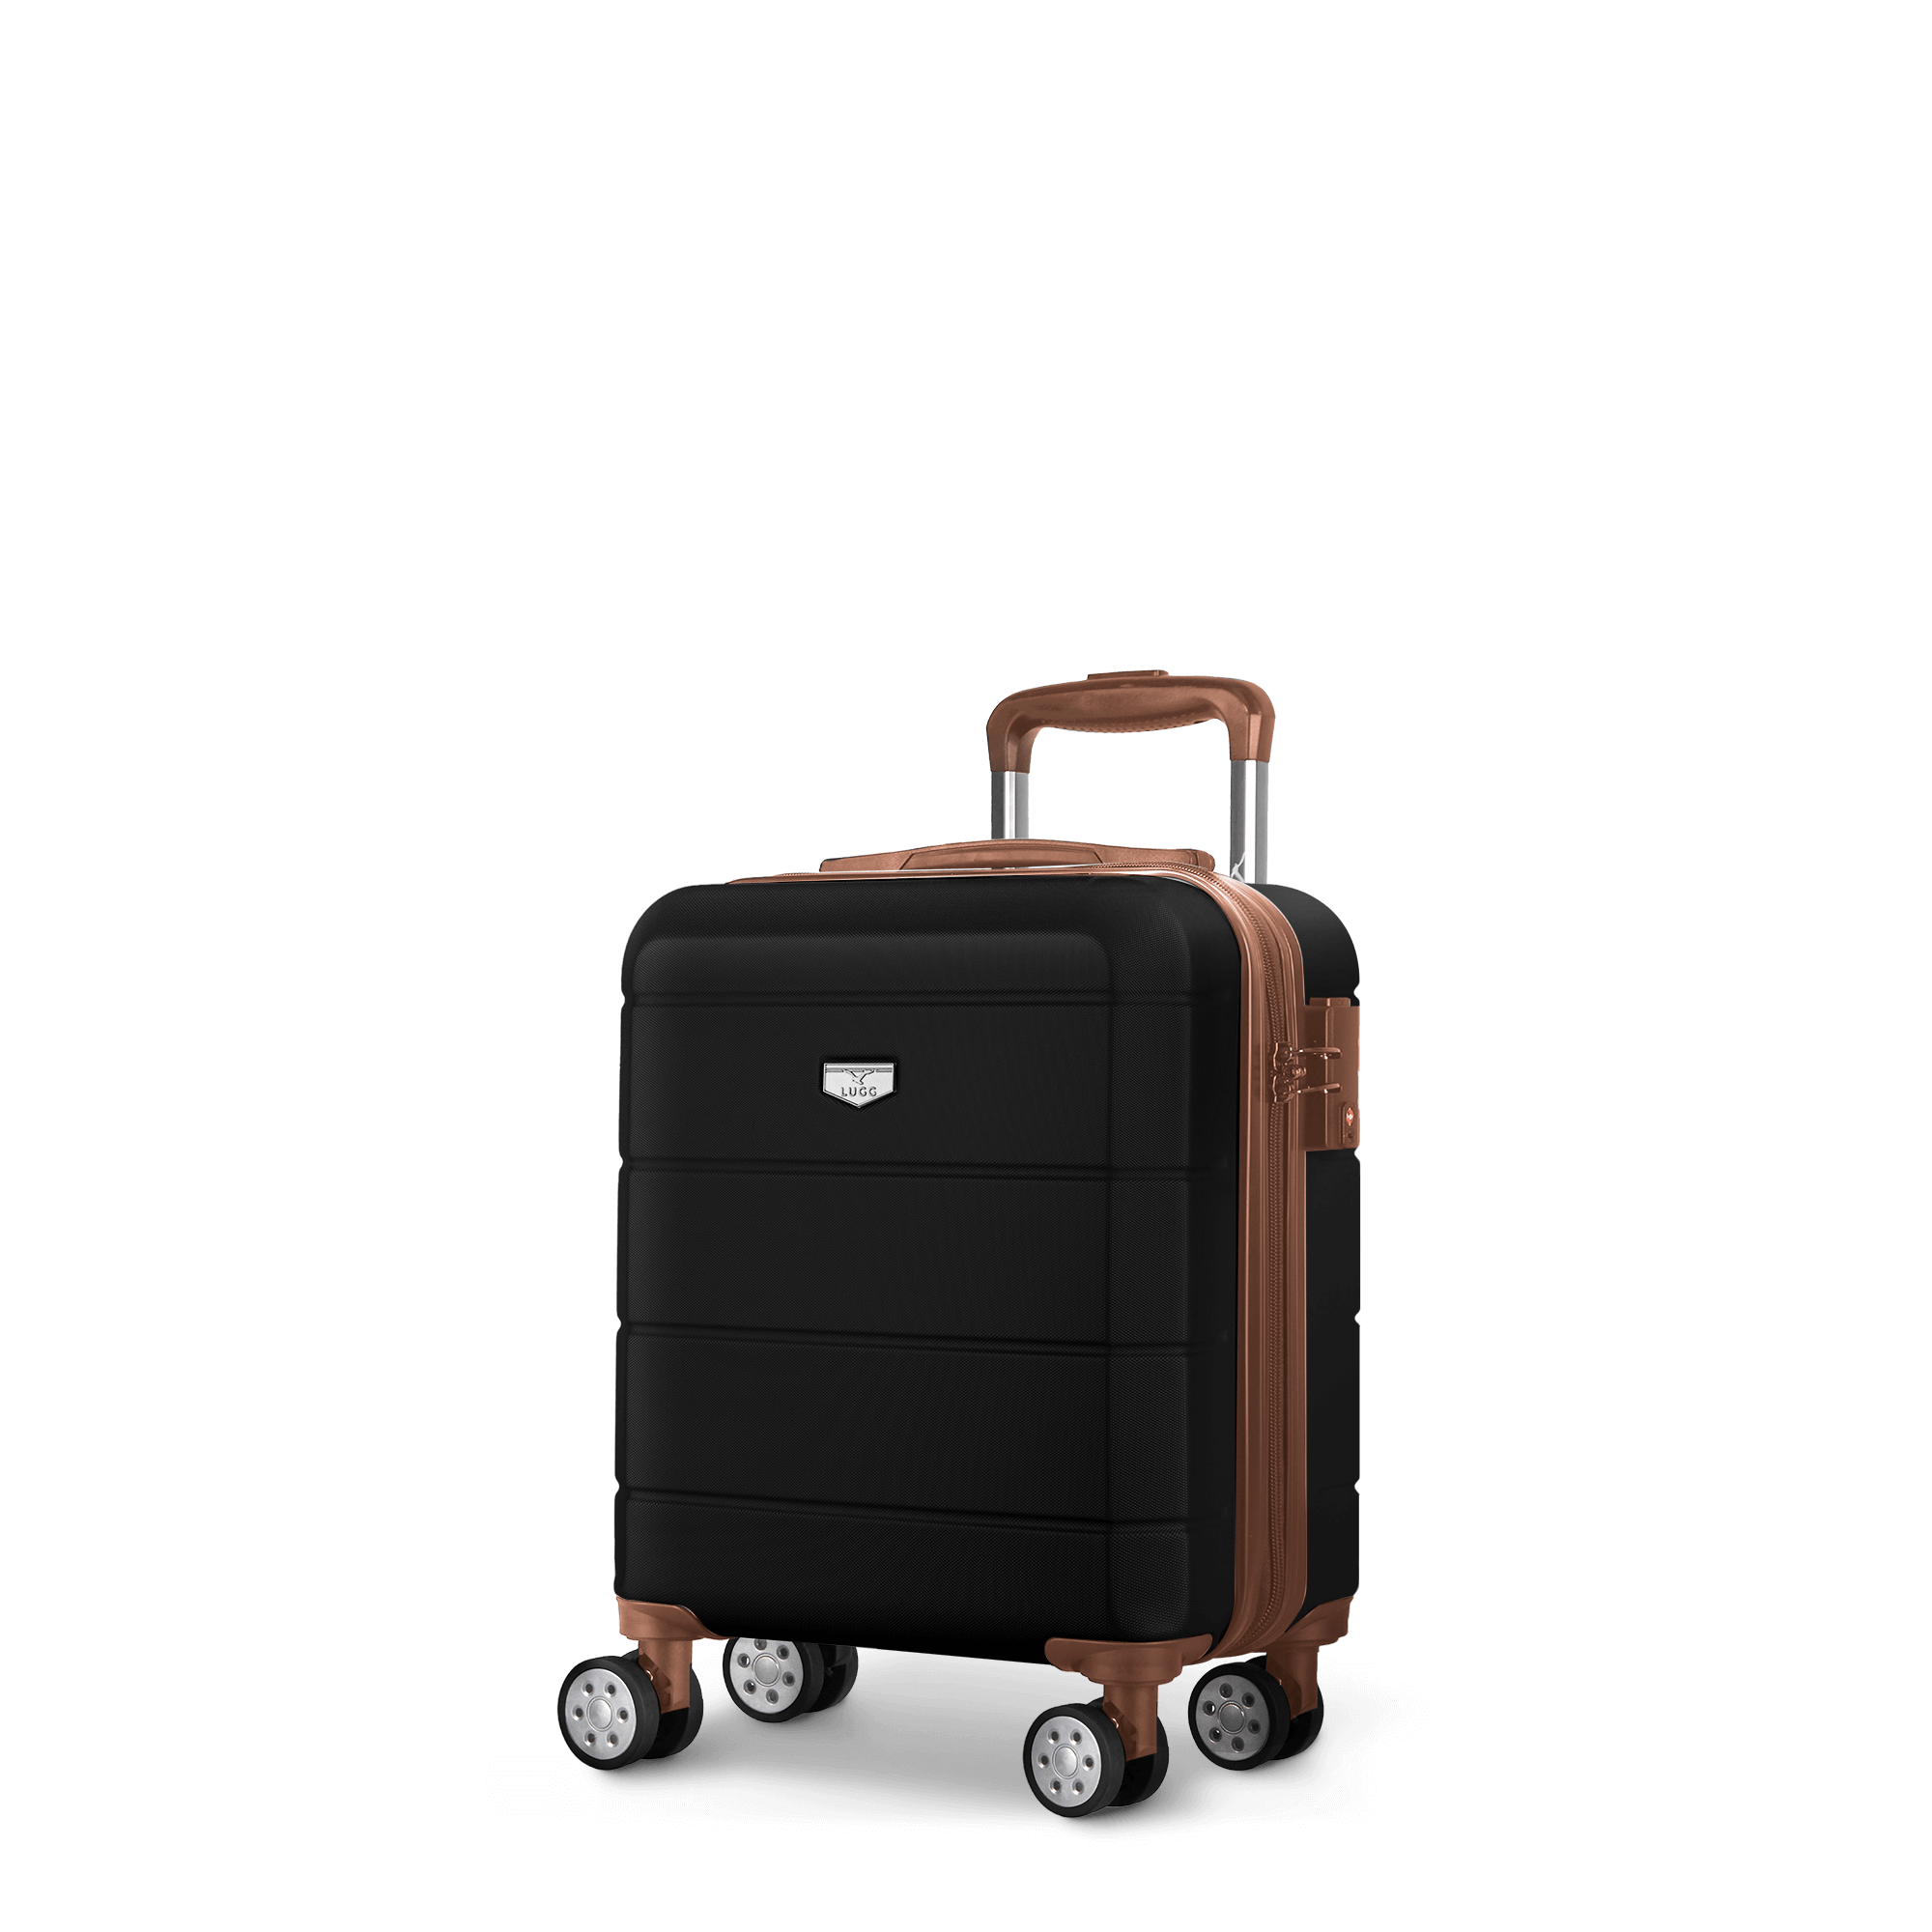 Jetset Cabin Suitcase in Black & Brown